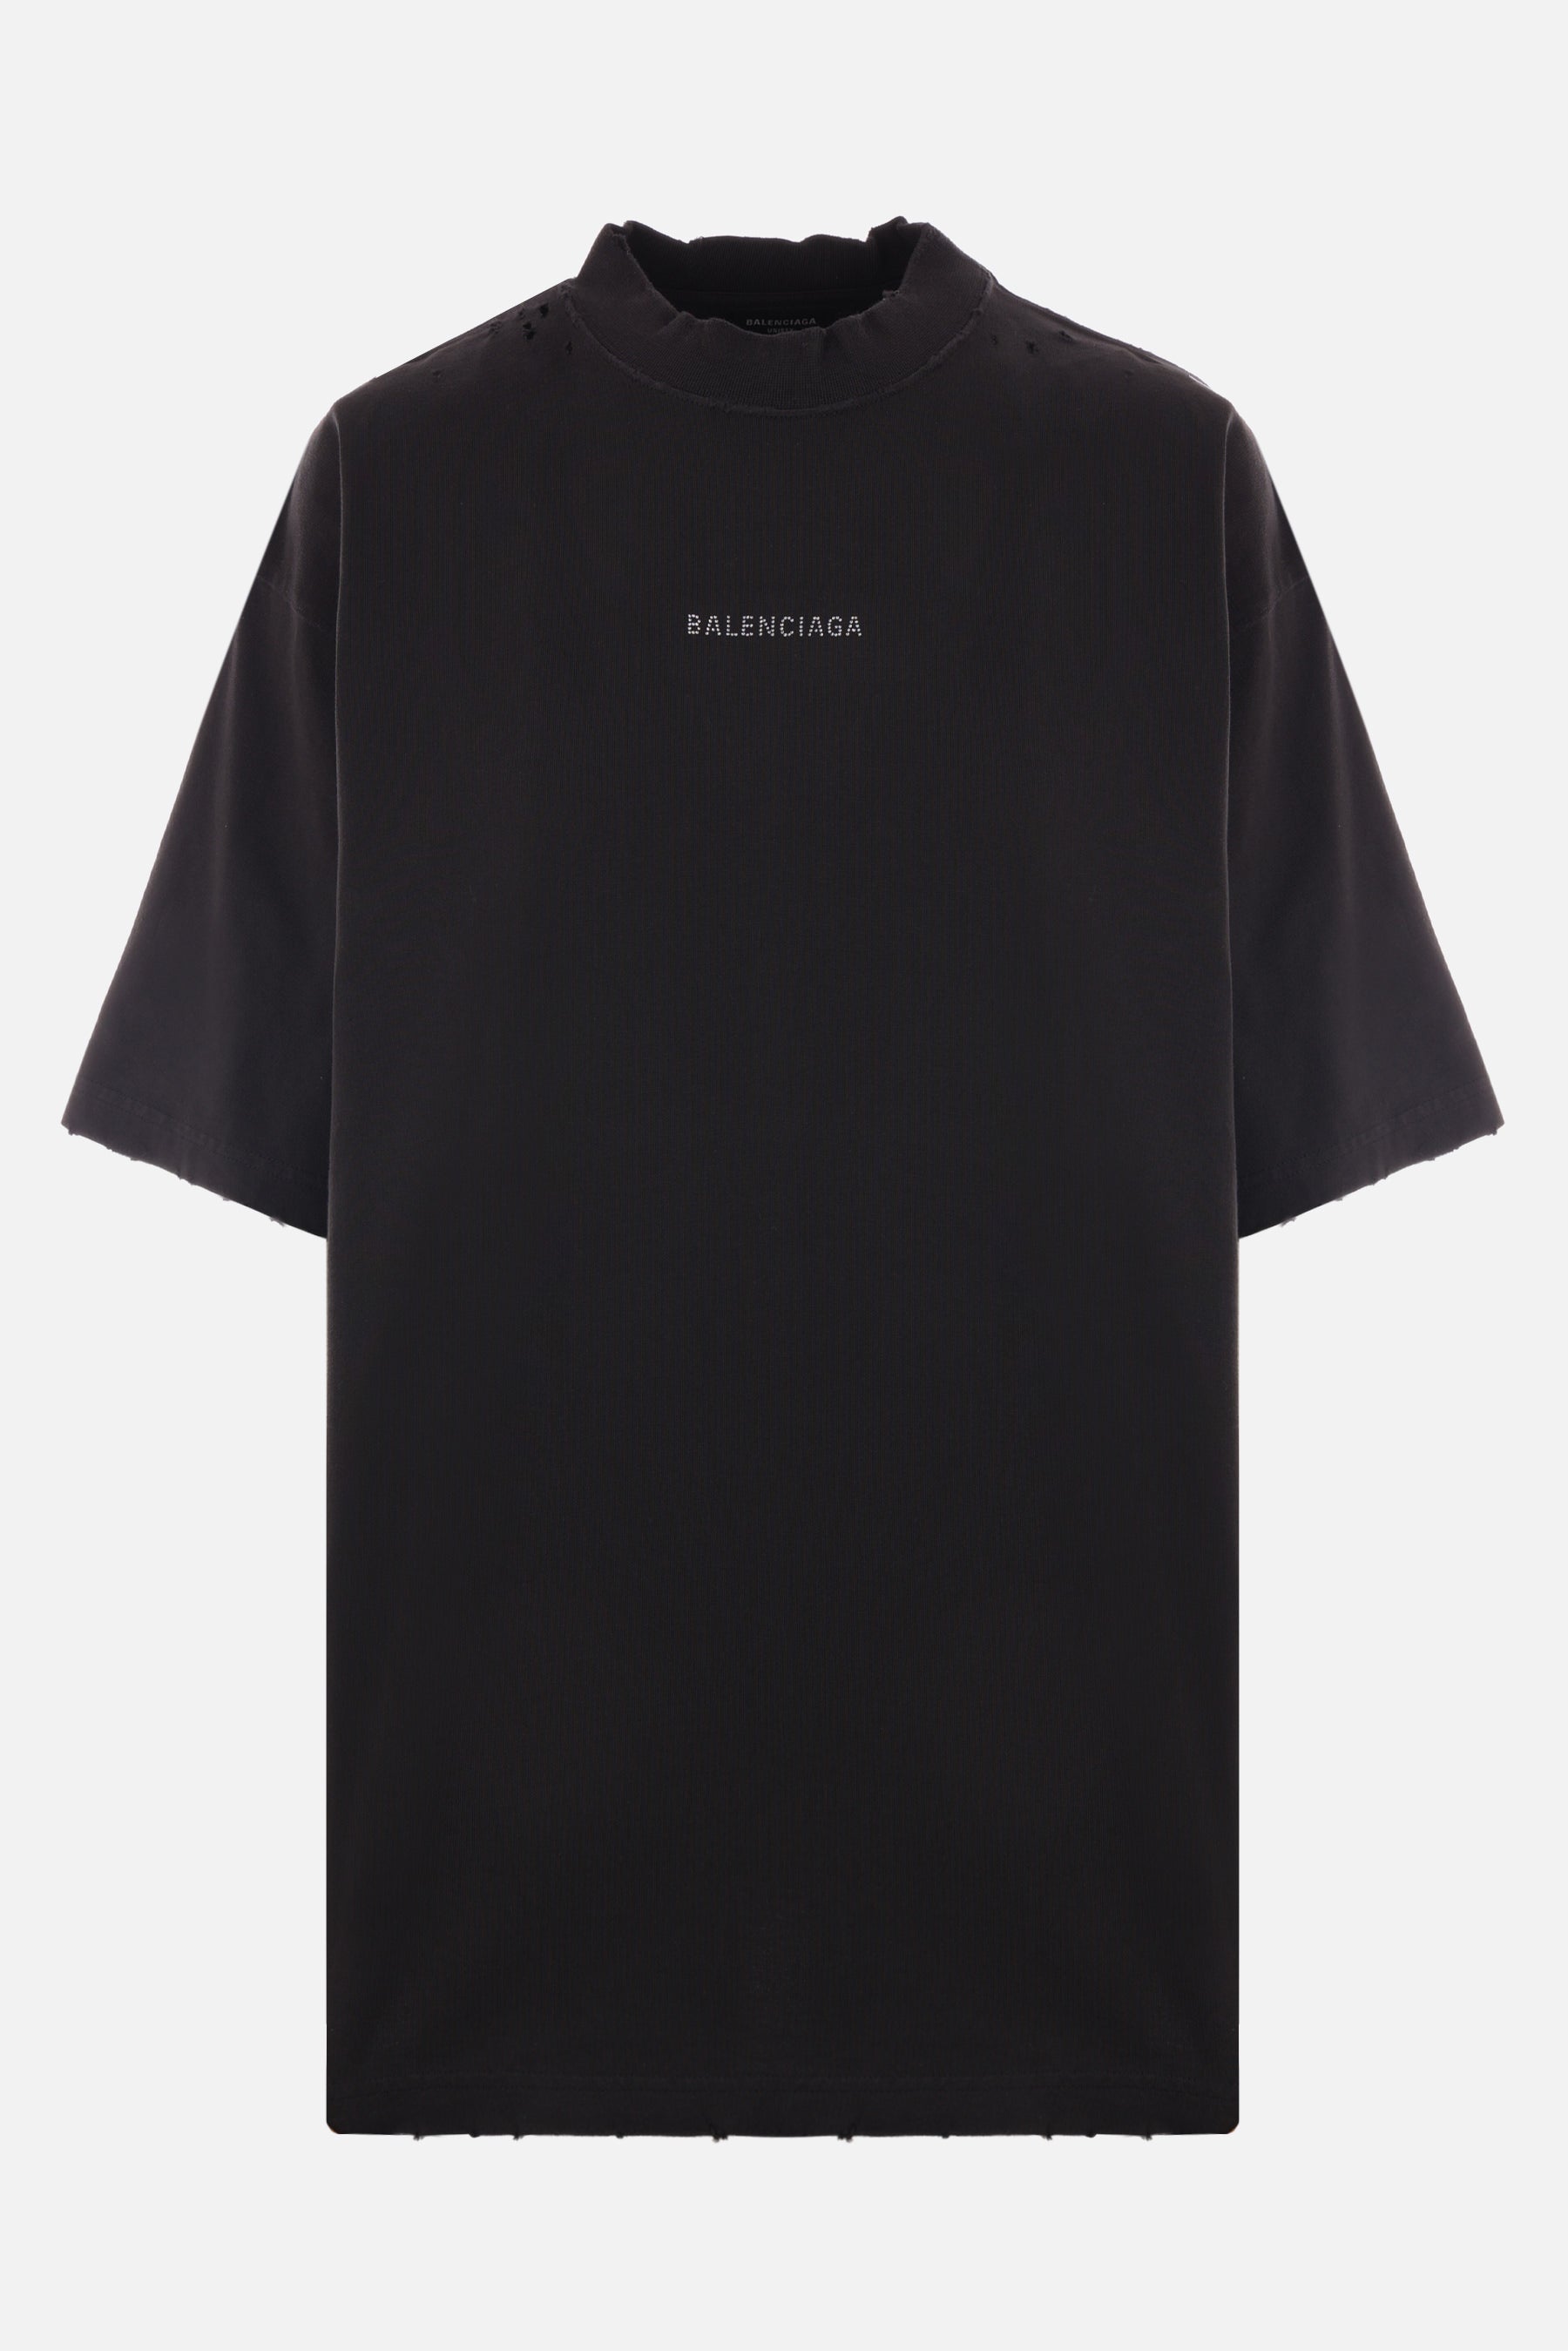 t-shirt Balenciaga Back in cotone